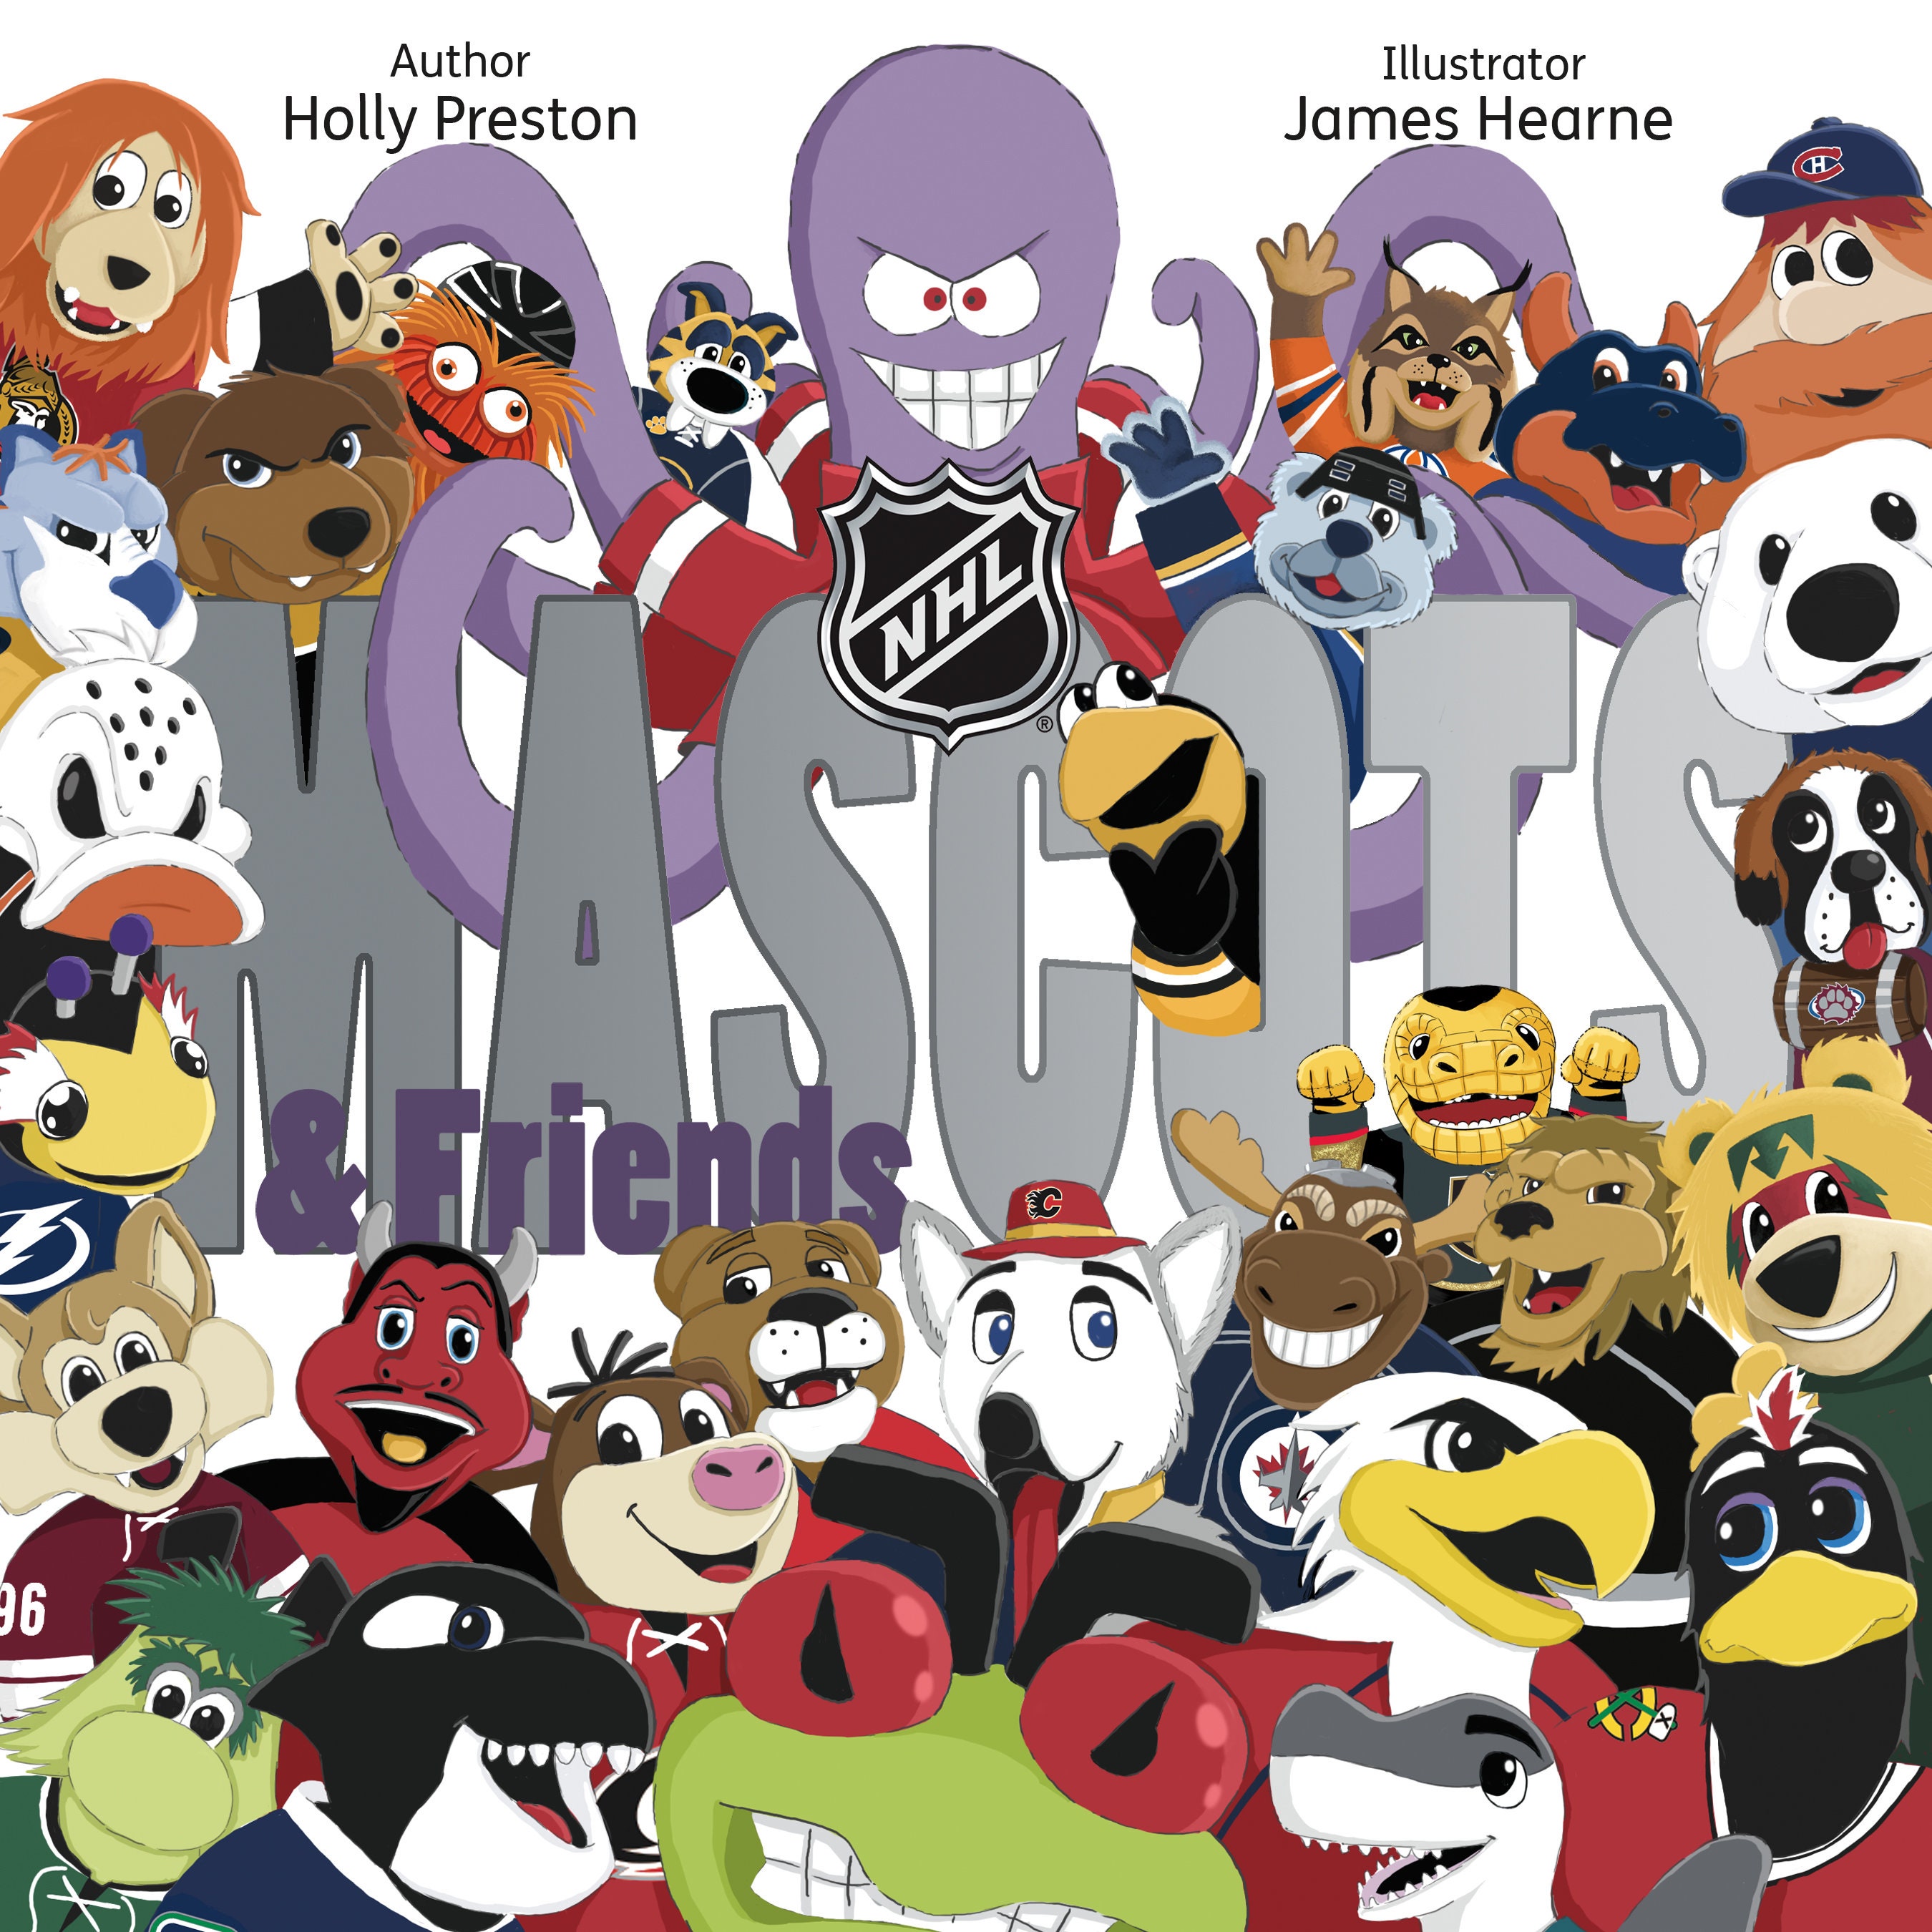 NHL Gritty Adult Mascot Costume 